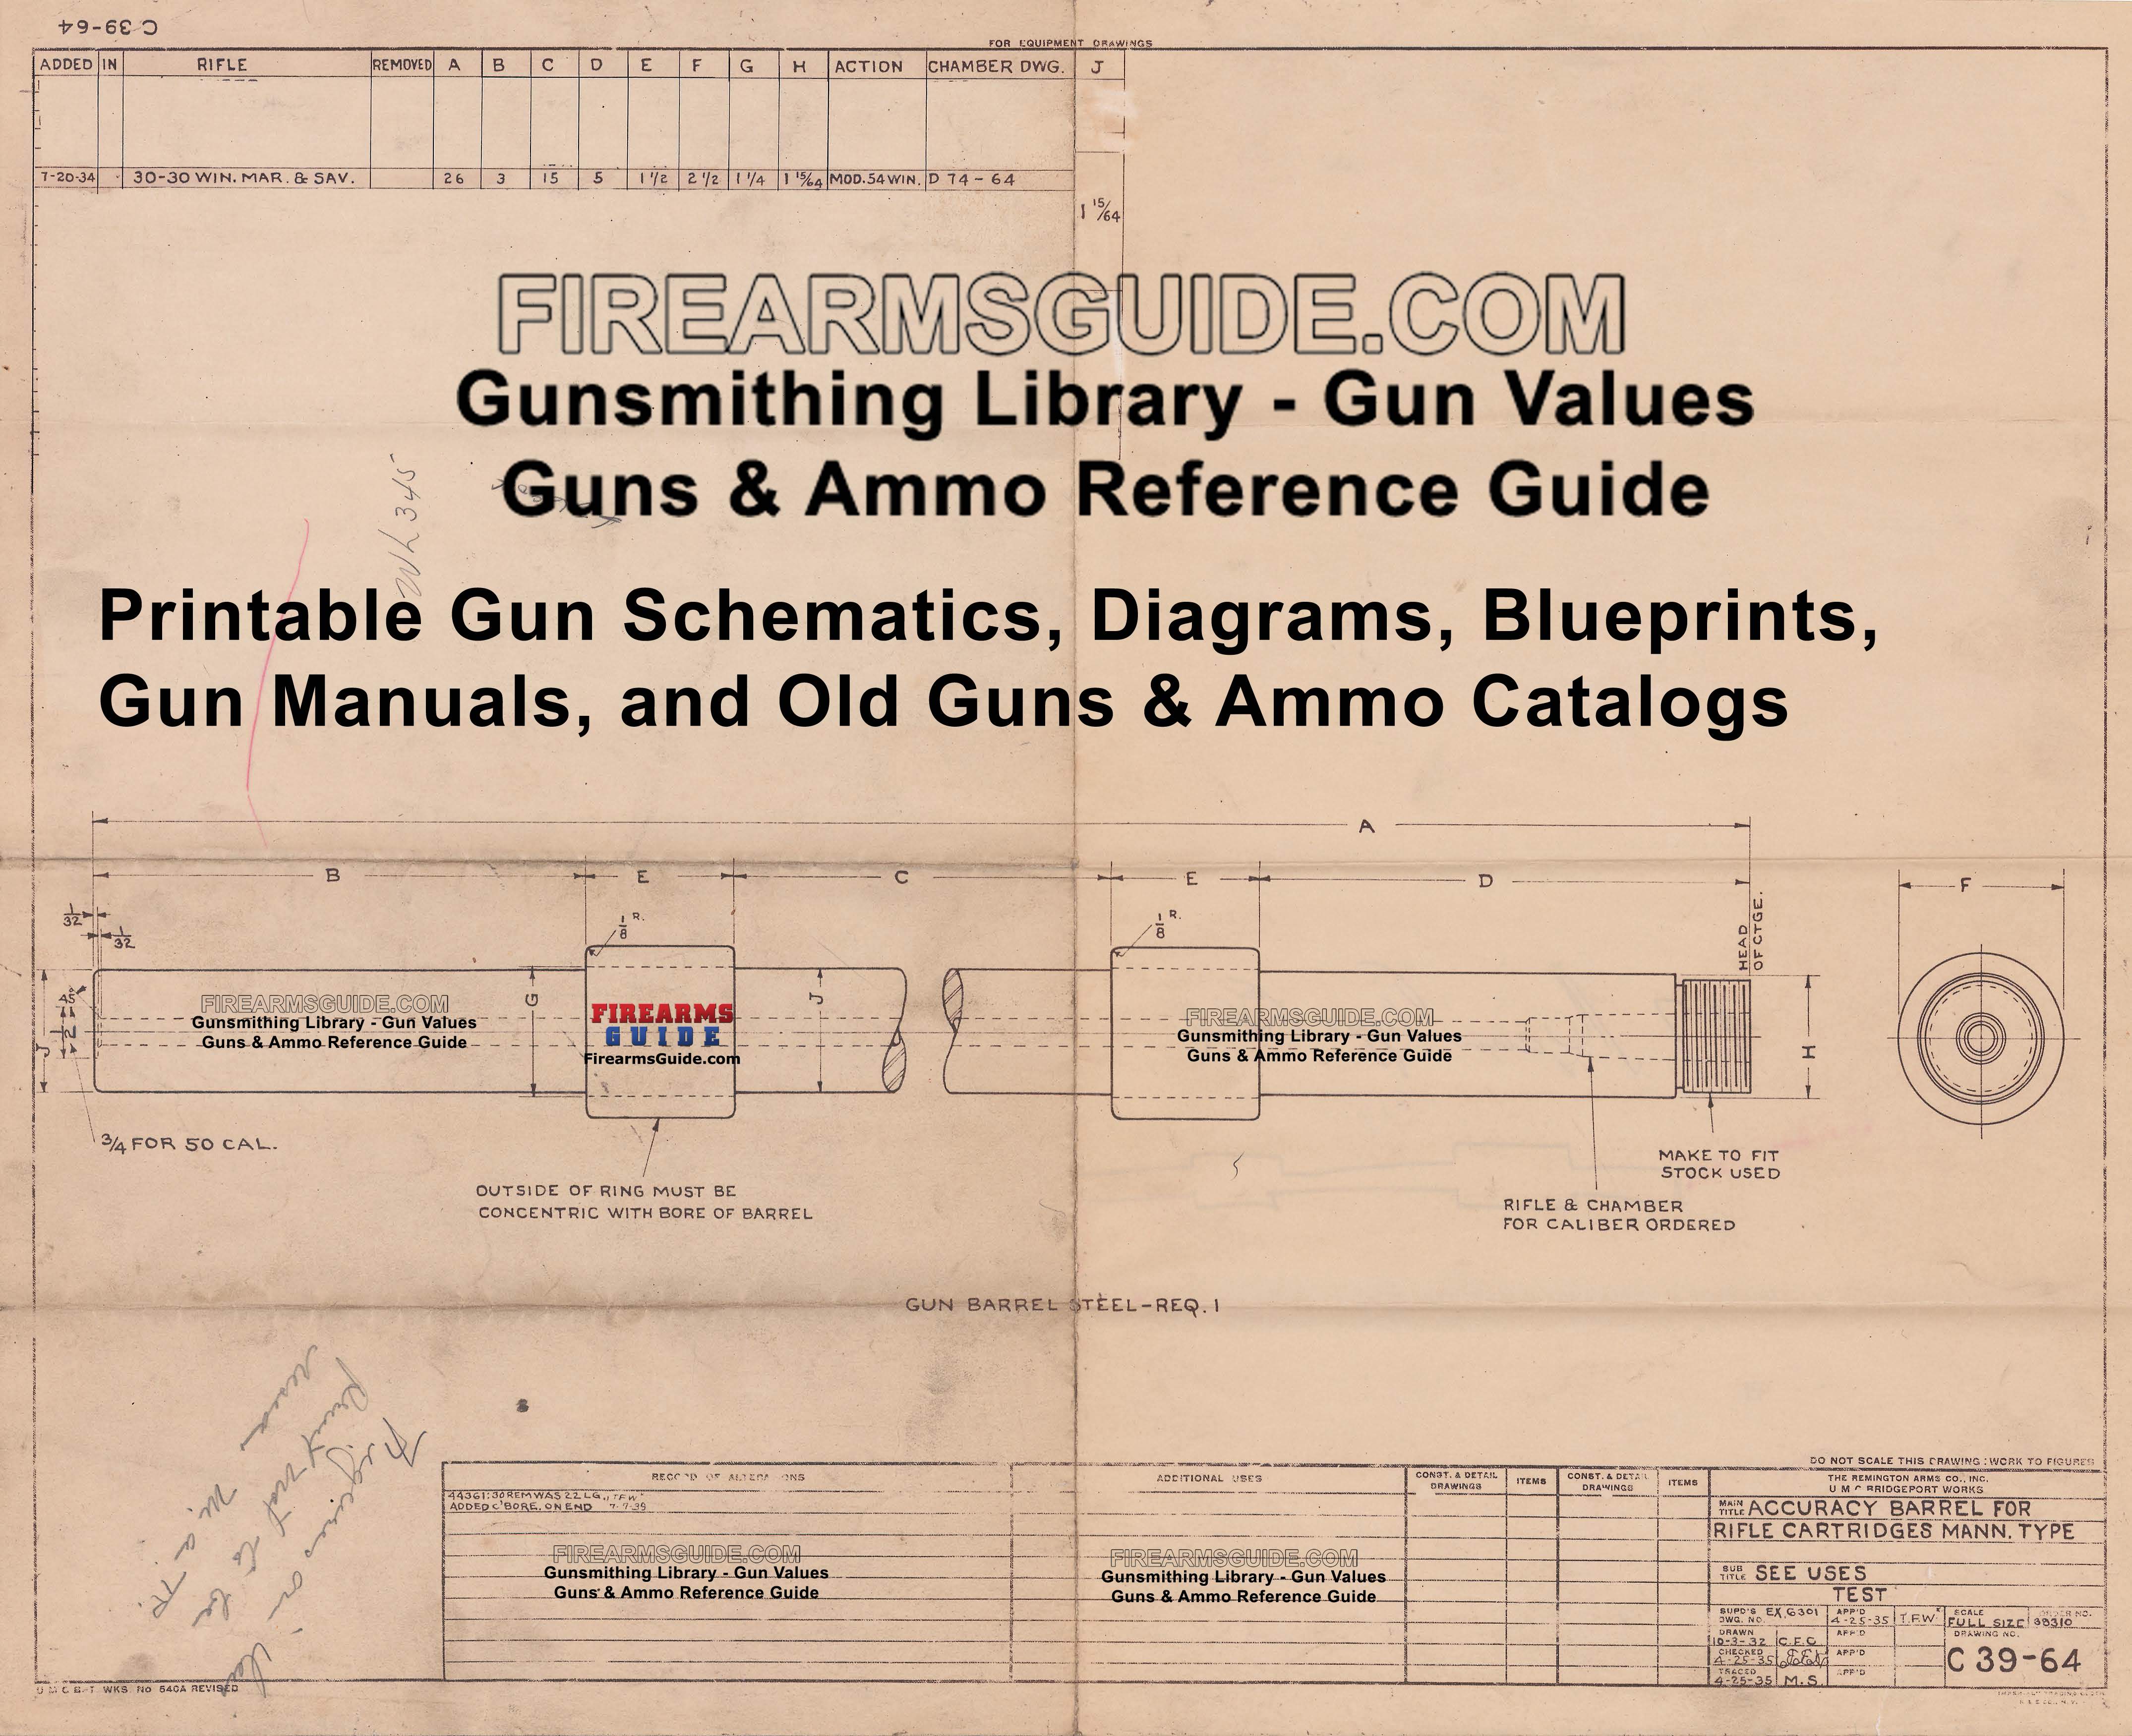 gunsmithing-library-for-gun-enthusiasts-and-gunsmiths-thousands-of